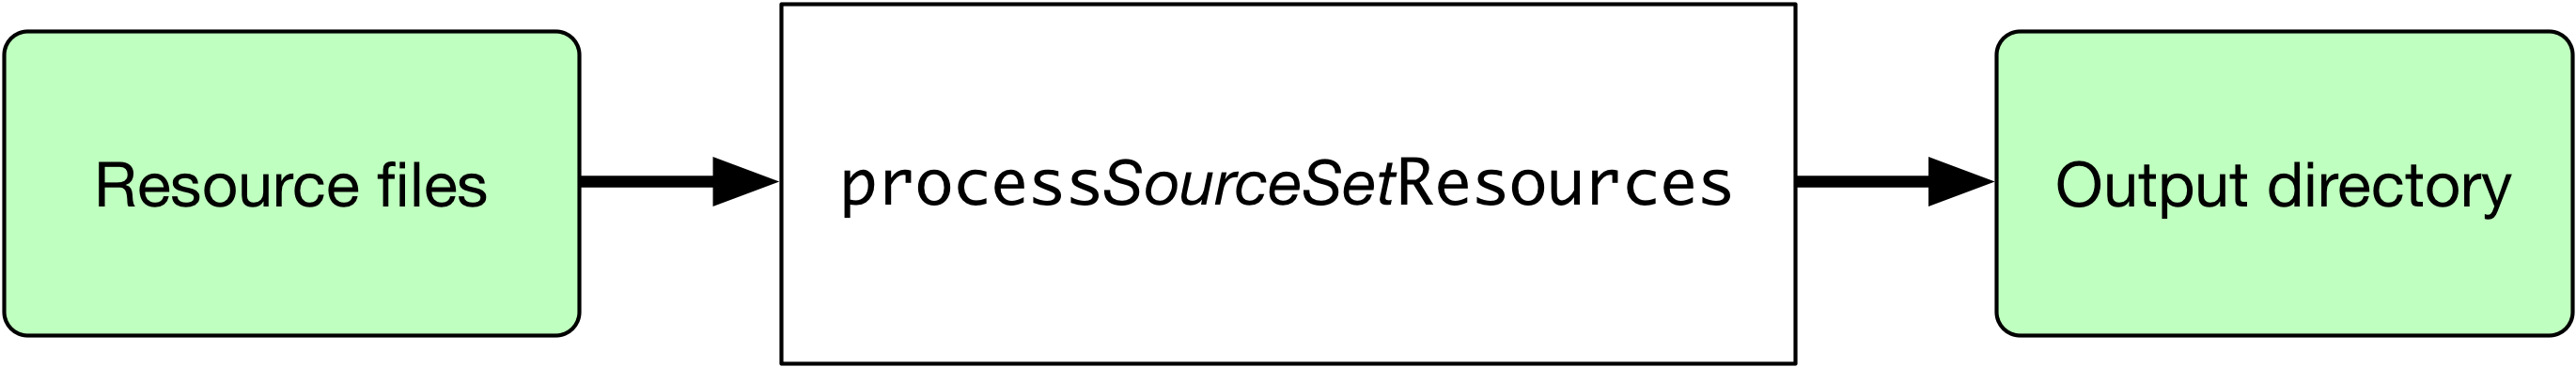 java sourcesets process resources